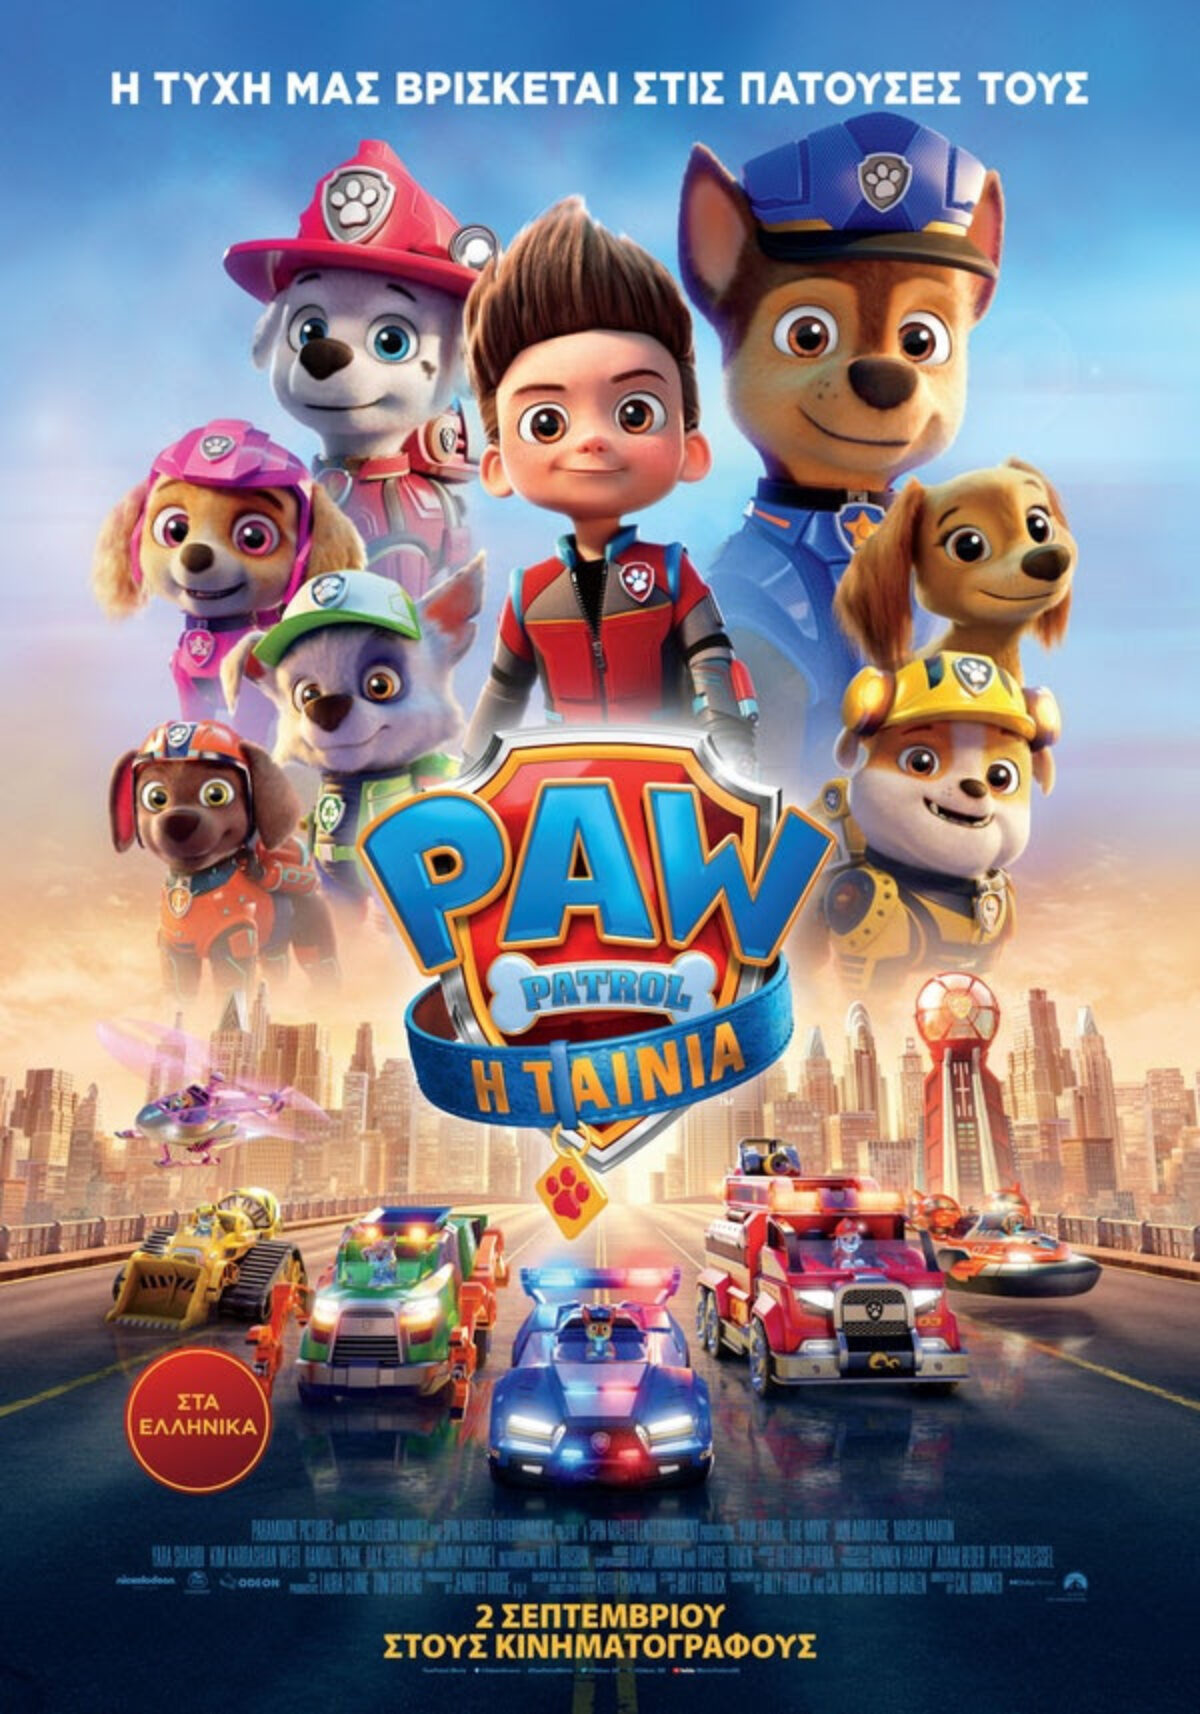 «PAW PATROL: Η Ταινία» (PAW PATROL: The Movie) | 2 Σεπτεμβρίου στους Κινηματογράφους από την ODEON